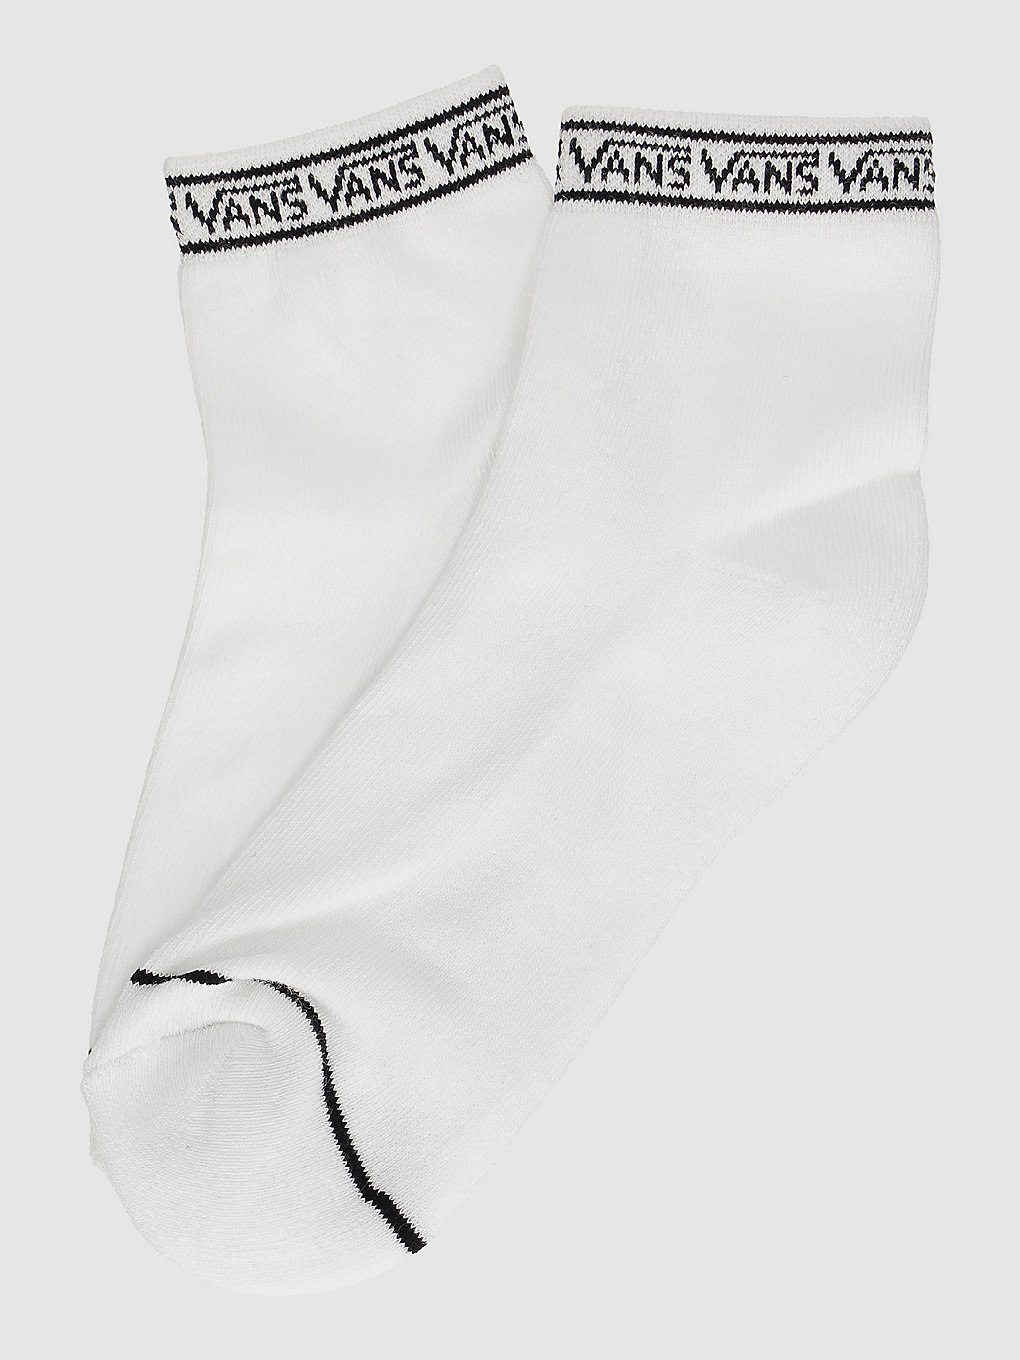 Vans Low Tide (6.5-10) Socken white kaufen